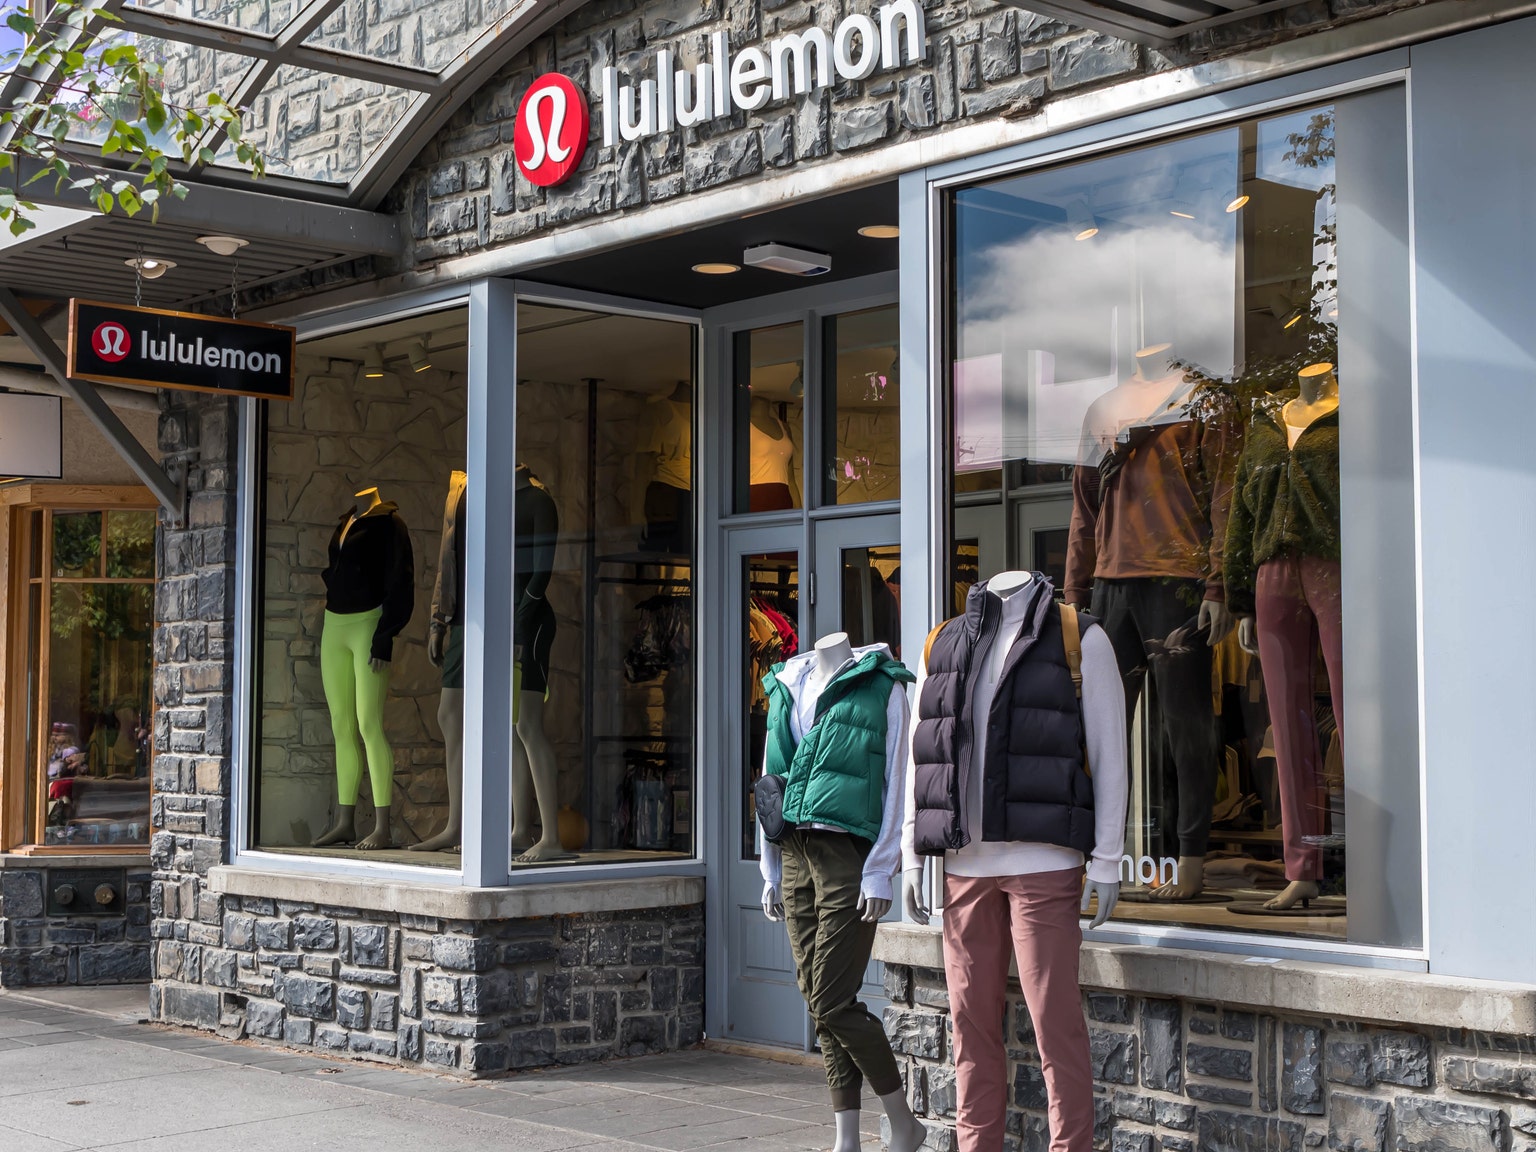 Yoga wear retailer Lululemon to close 40 Ivivva stores